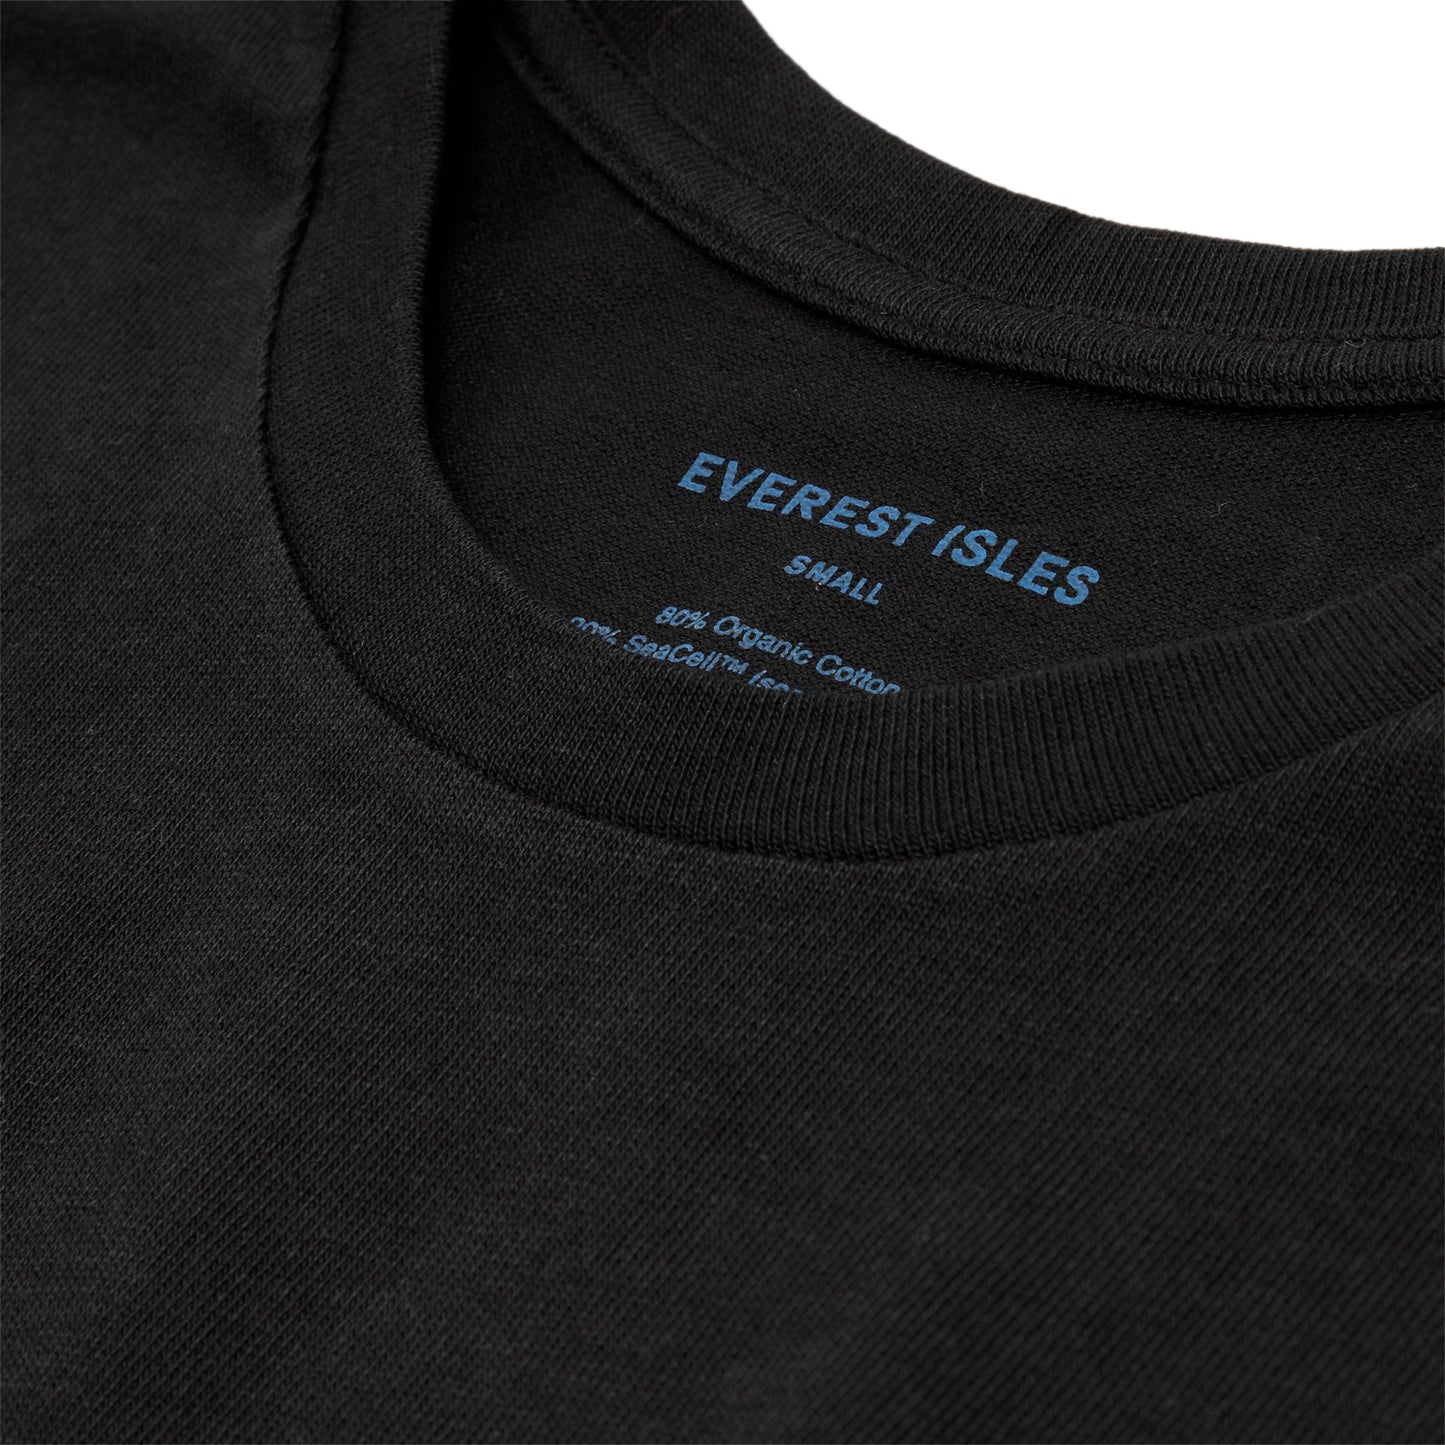 Everest Isles Long Sleeve Tee Shirt (Black)